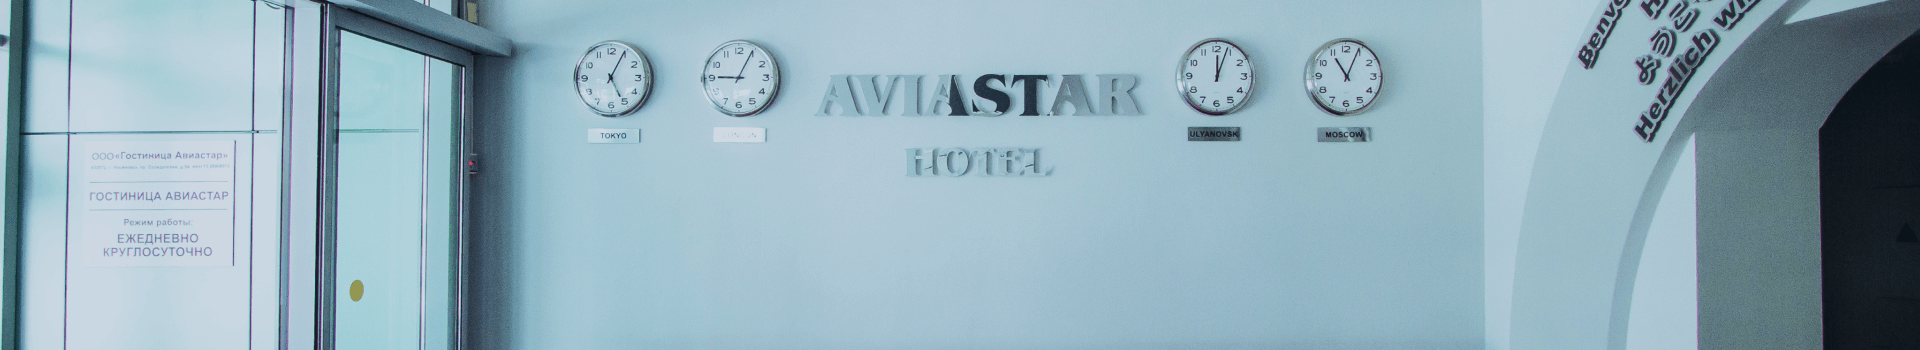 О гостинице «Авиастар»